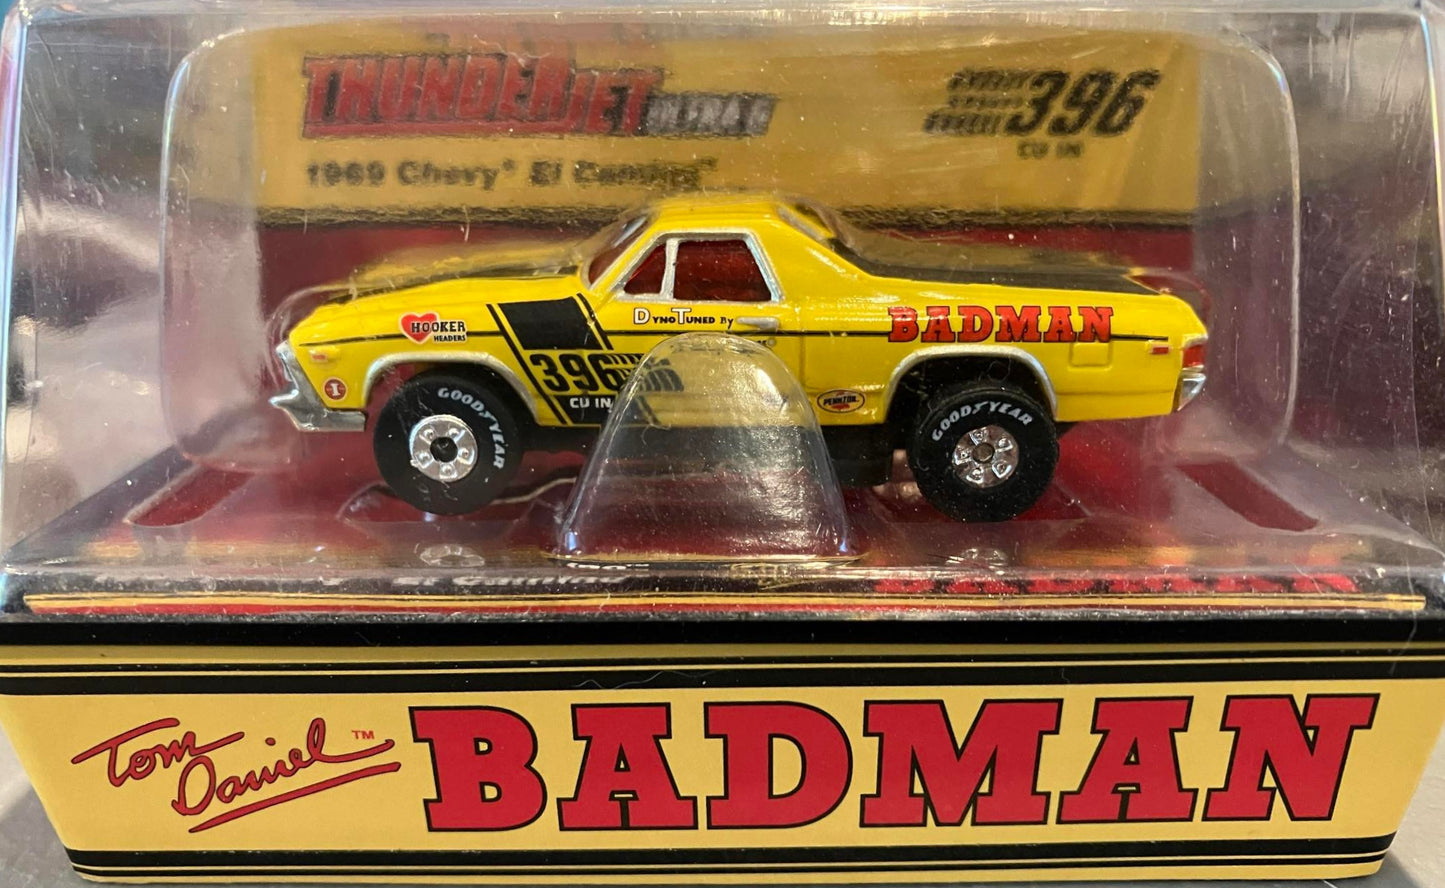 1969 Chevy El Camino Thunderjet, Tom Daniel's BADMAN Limited Exclusive HO Slot Car